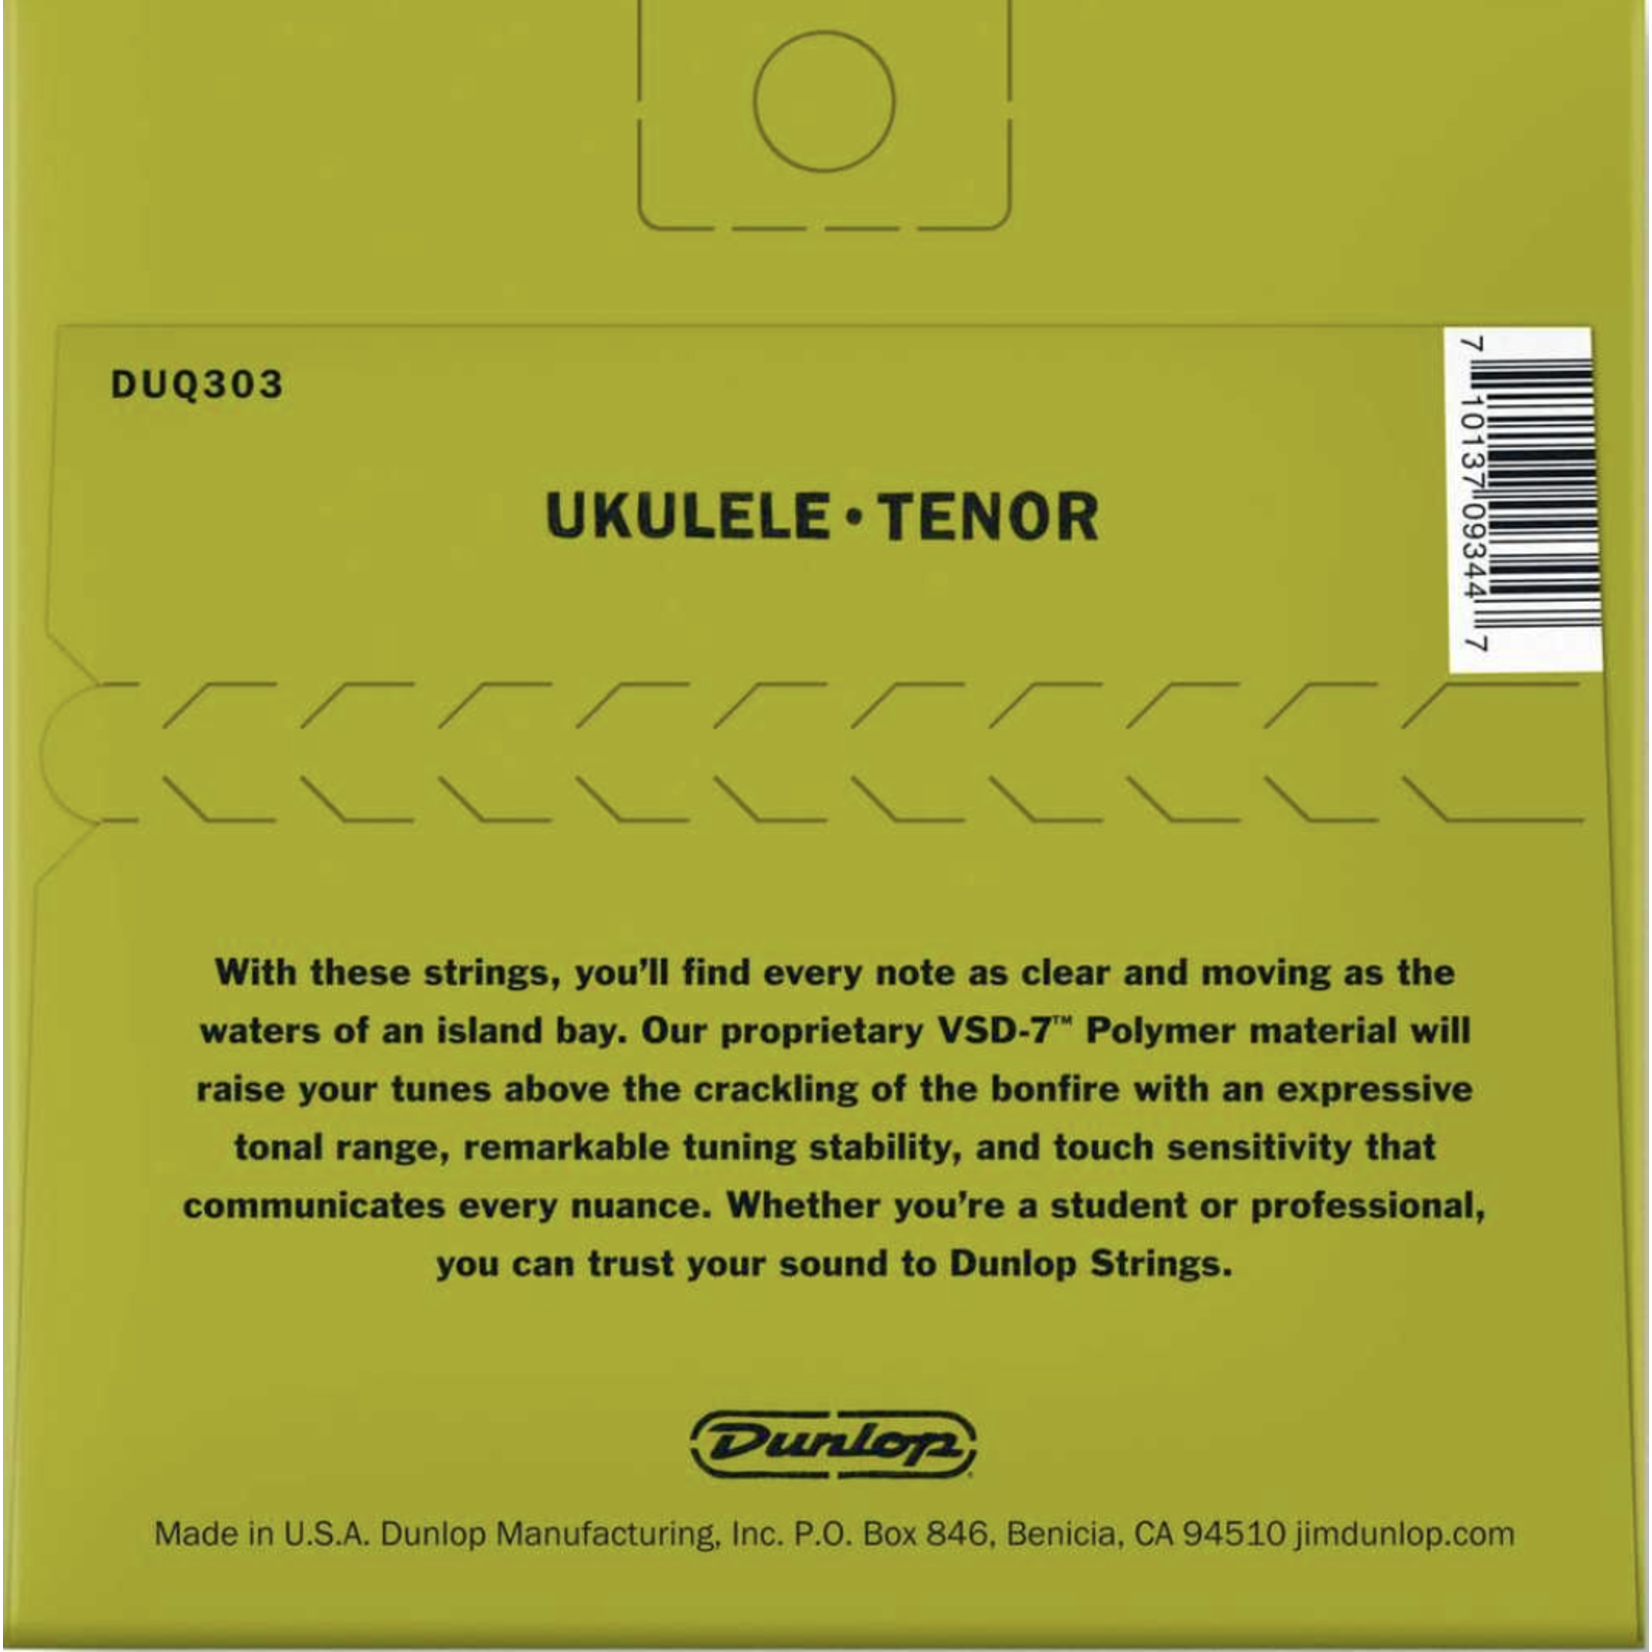 Dunlop Dunlop Strings Set Ukulele Tenor DUQ303